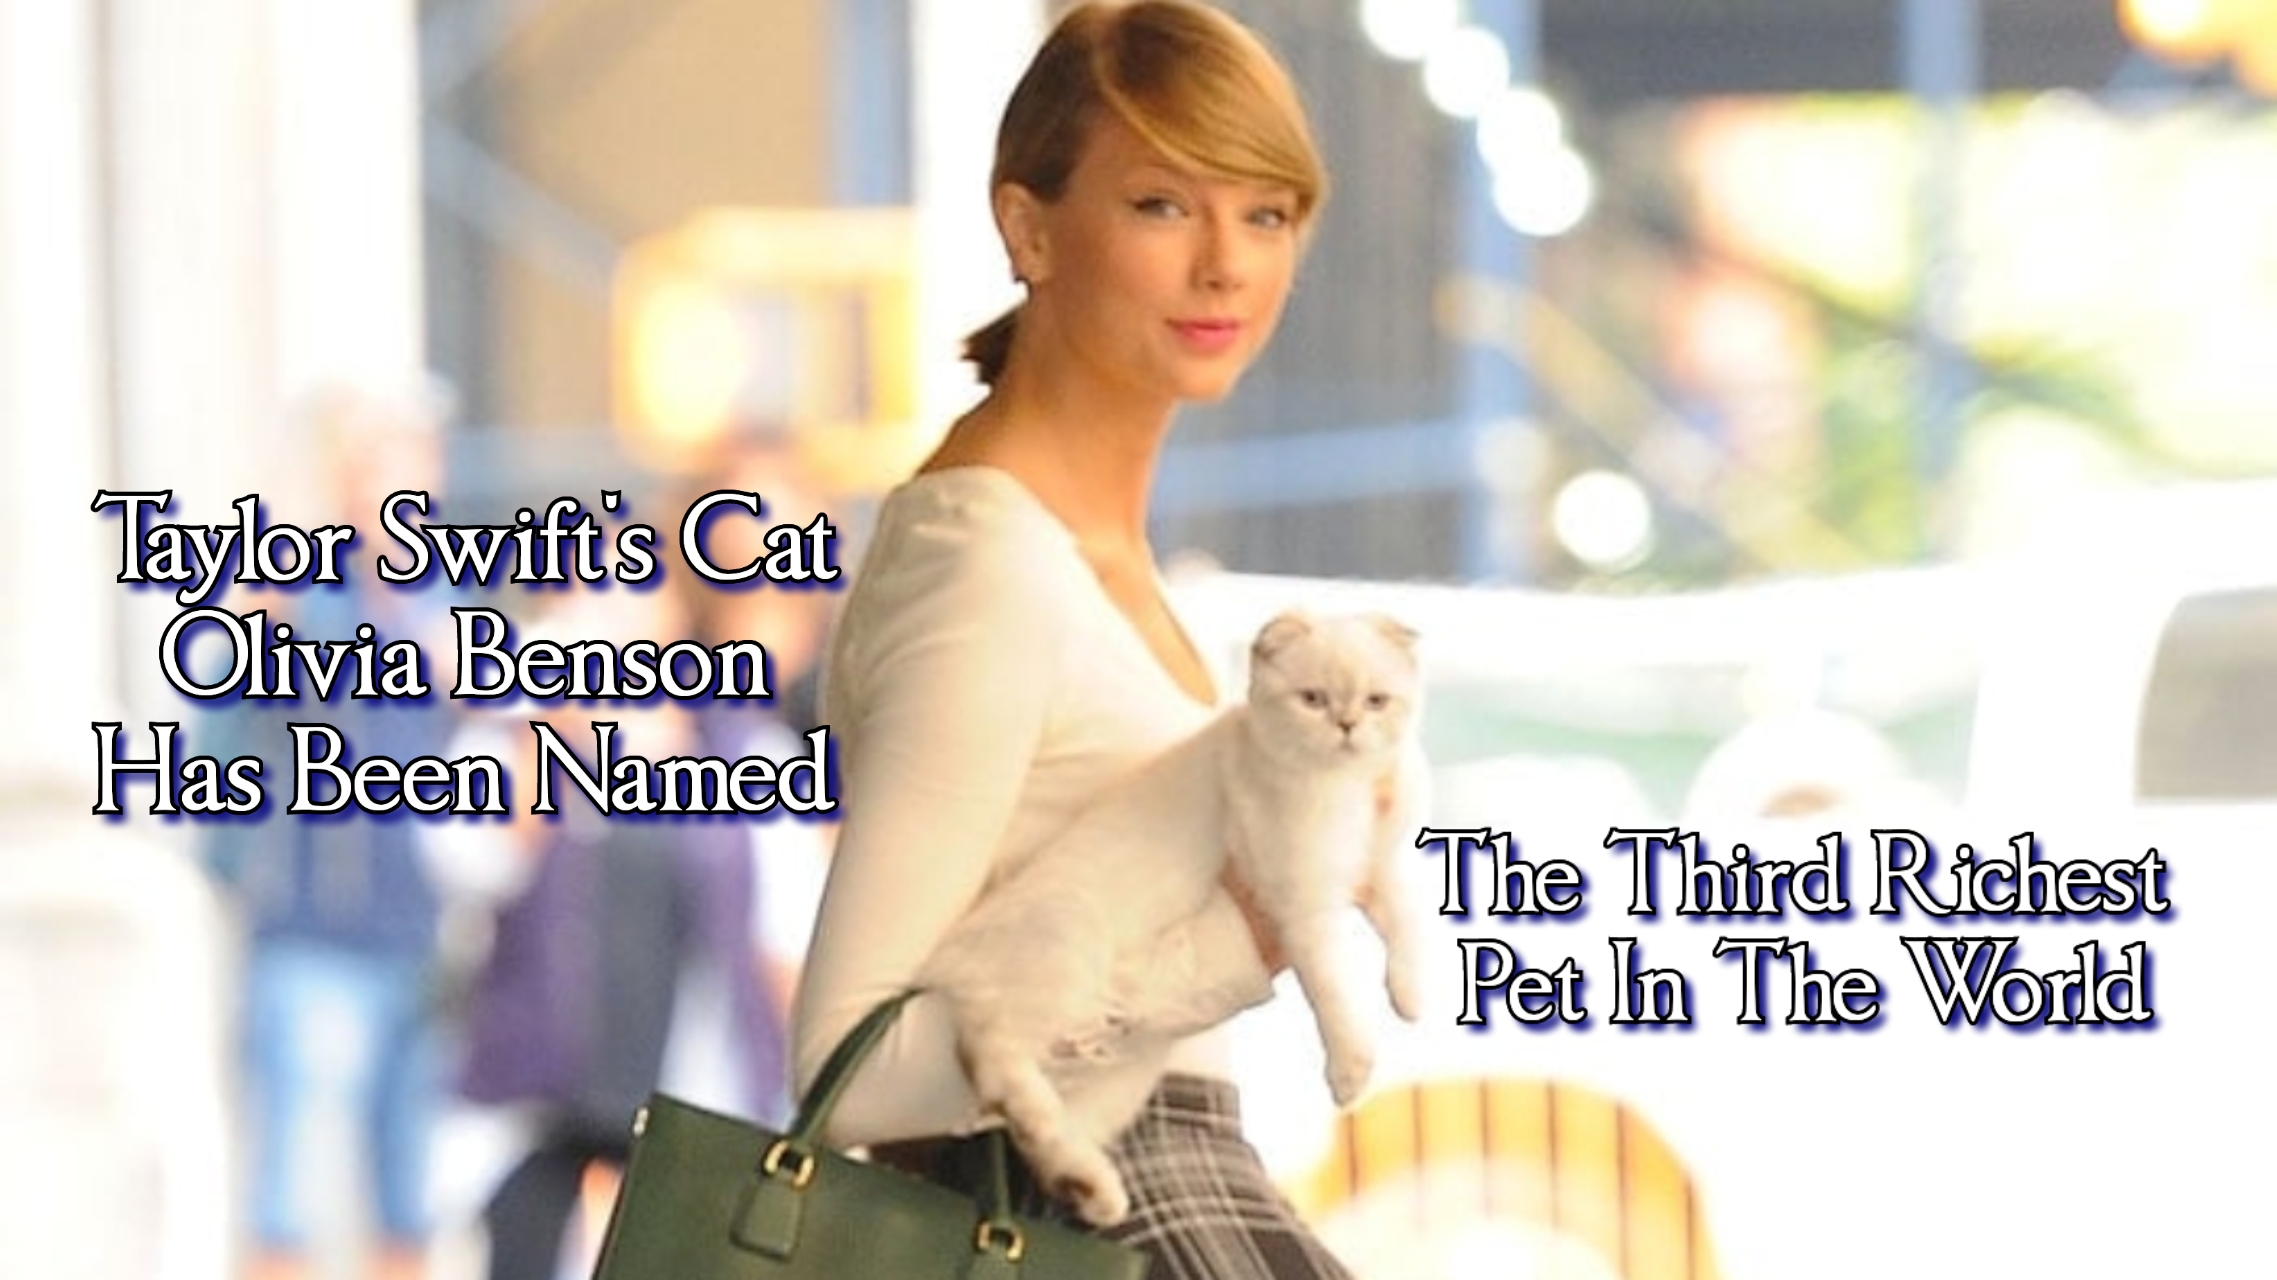 Taylor Swift's Cat Olivia Benson Is The World's Third Richest Pet With $ 97  Million Net Worth - WORLD INFO